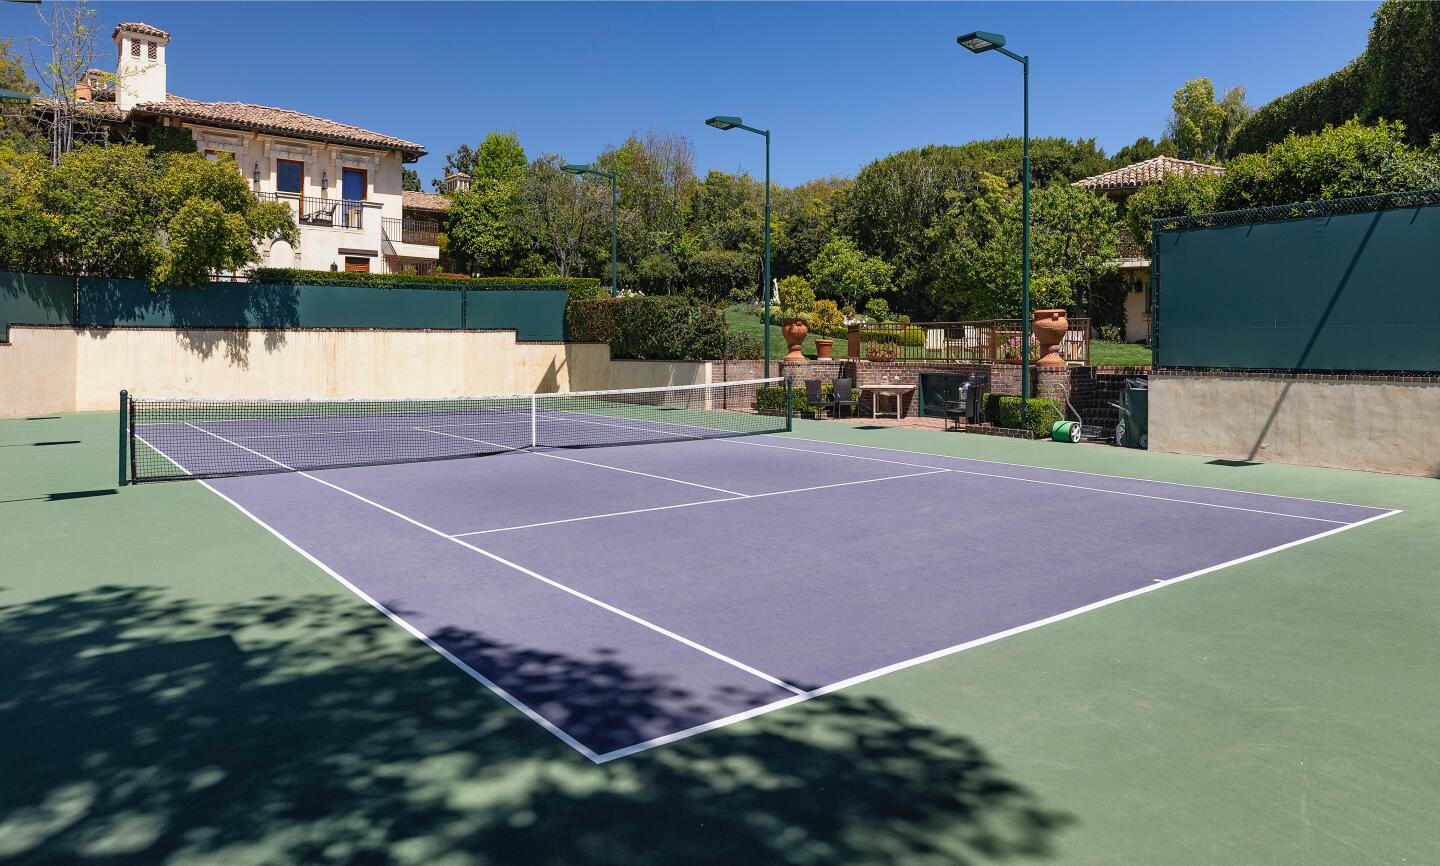 The tennis court.